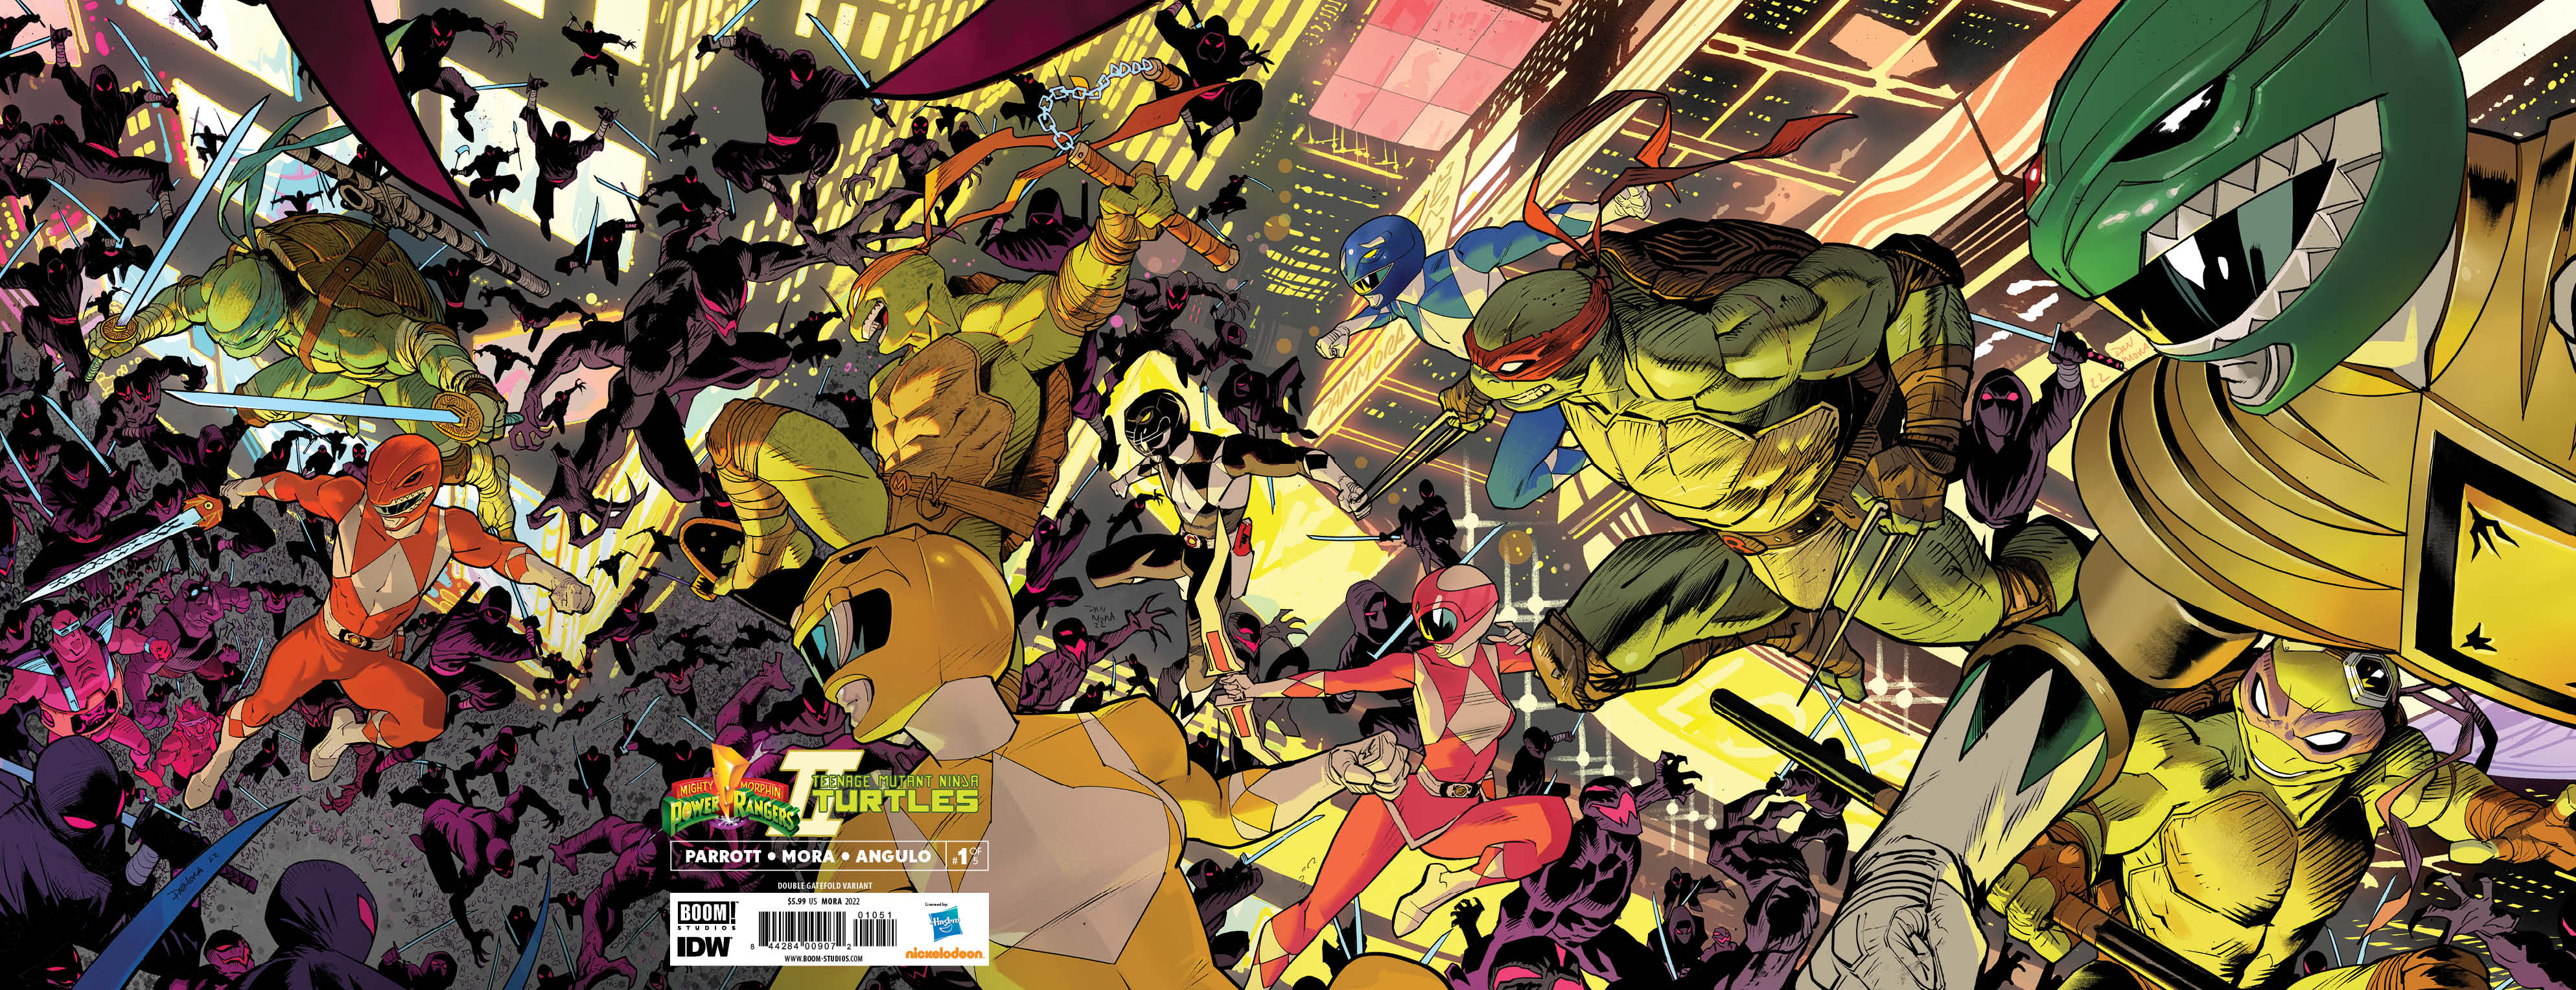 Mighty Morphin Power Rangers Teenage Mutant Ninja Turtles II #1 Cover E Double Gatefold Variant Mora (Of 5)